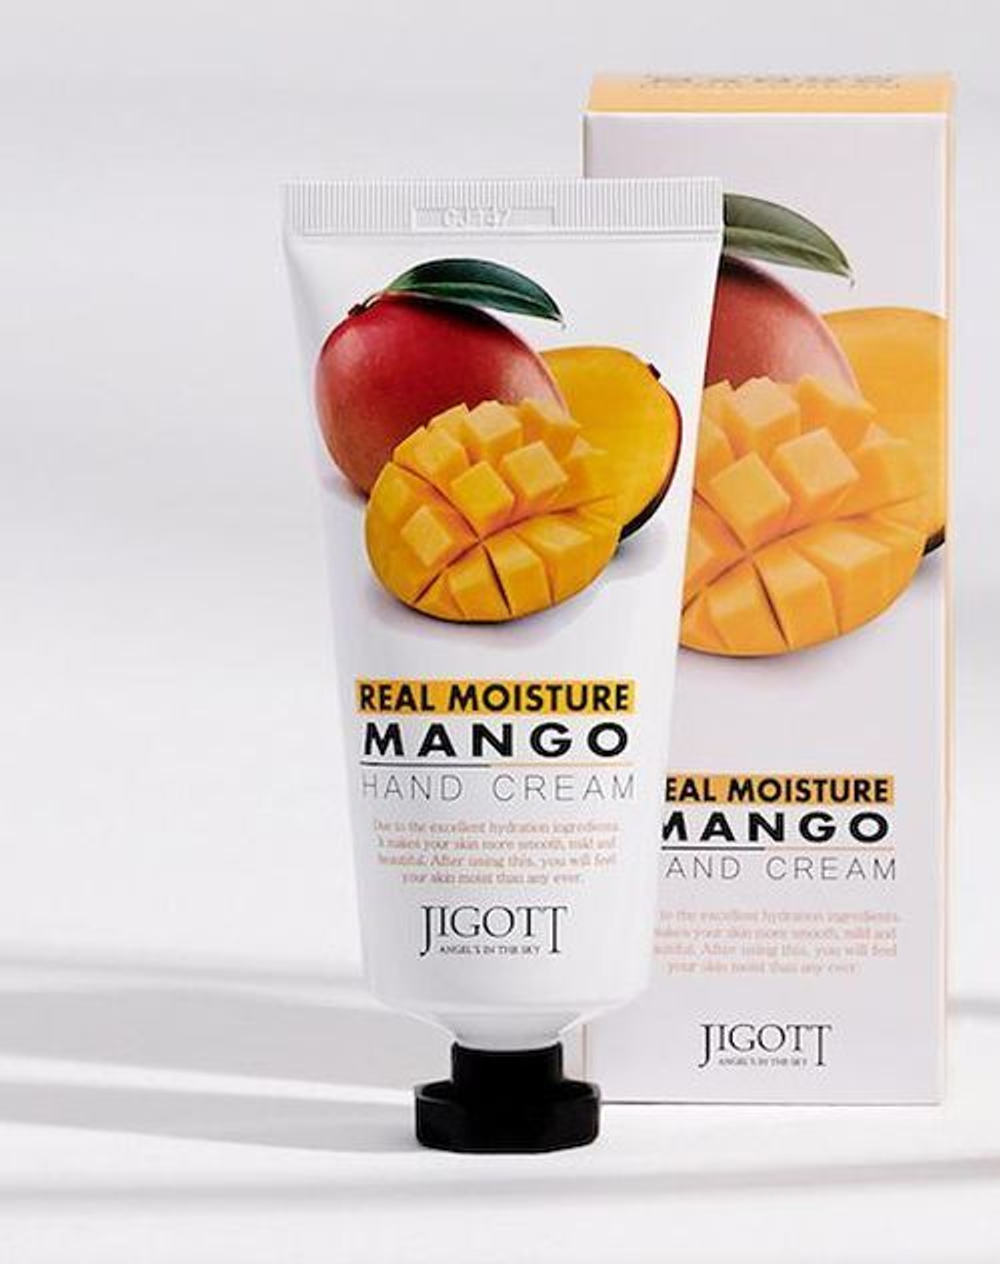 Jigott Крем для рук с экстрактом манго Real Moisture Mango Hand Cream,100 мл.